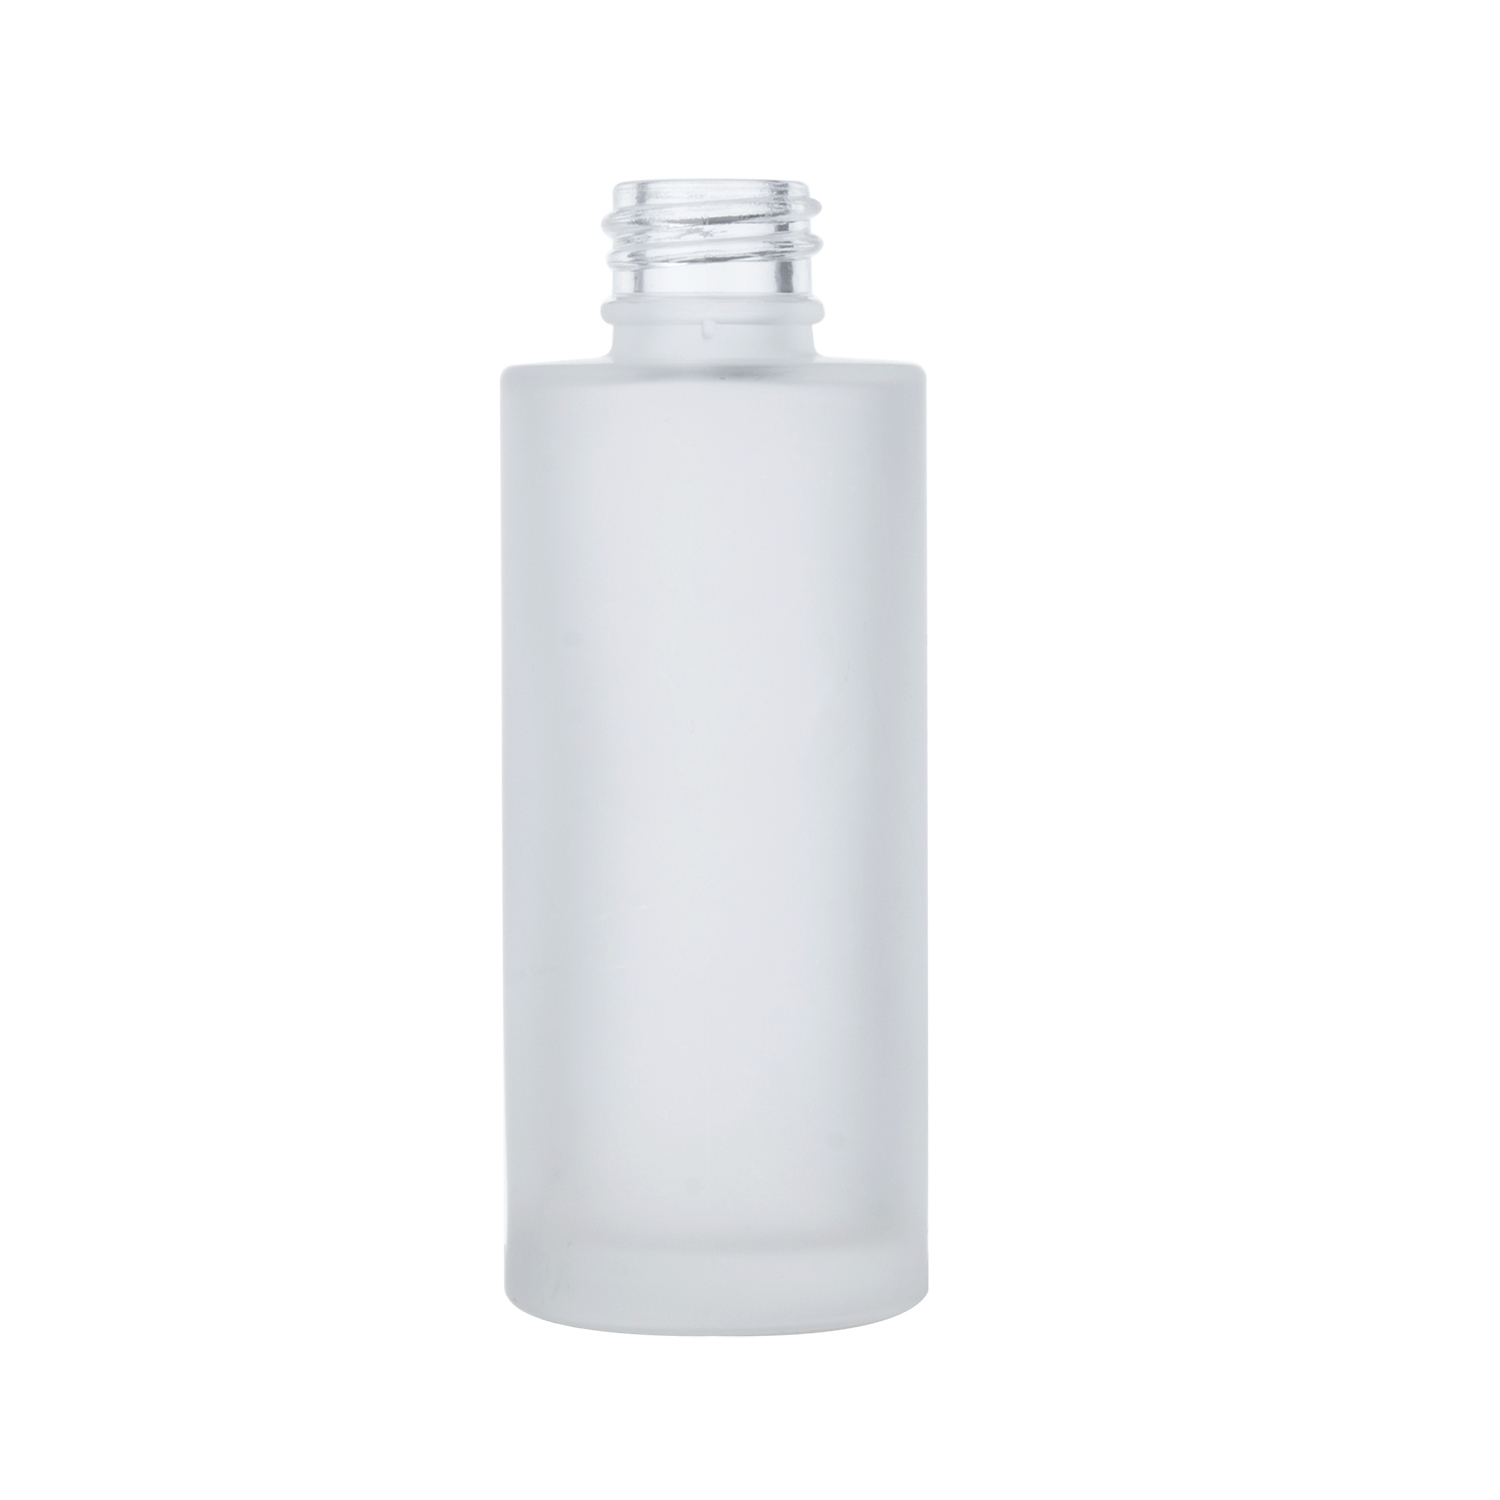  30ml 50ml 100ml 120ml Glass Bottle With Wood Cap Wohlesales Wood Cosmetic Spray Bottle